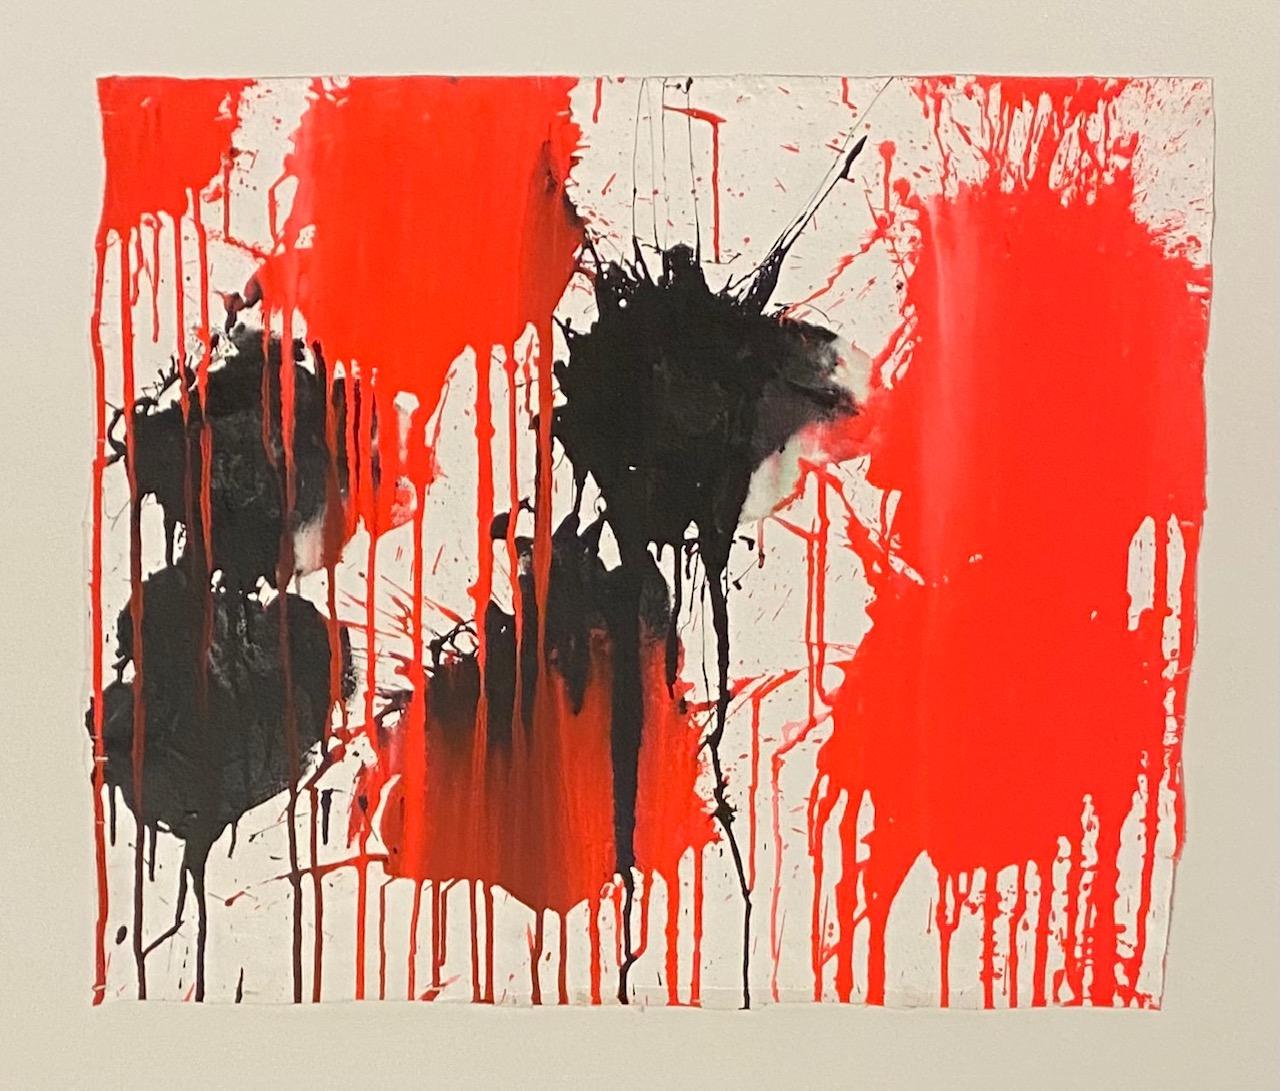 Abstract Painting Ushio Shinohara - « Red and Black », peinture acrylique sur toile - peinture abstraite de boxe